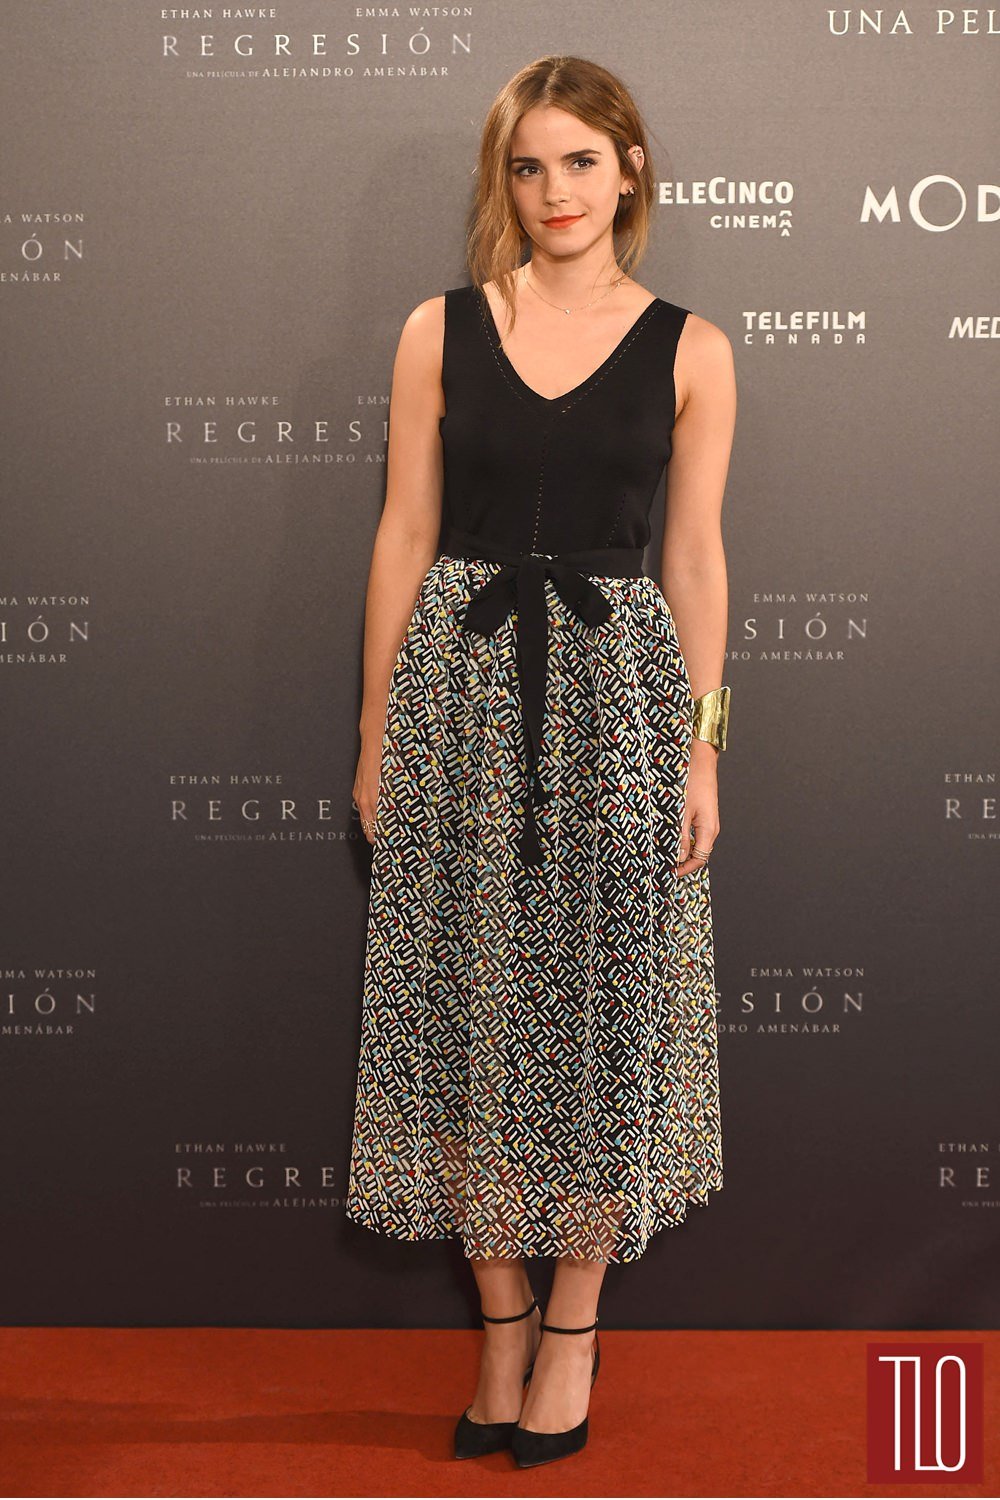 Emma-Watson-Regression-Madrid-Photocall-Red-Carpet-Fashion-Christopher-Kane-Tom-Lorenzo-Site-TLO-1.jpg